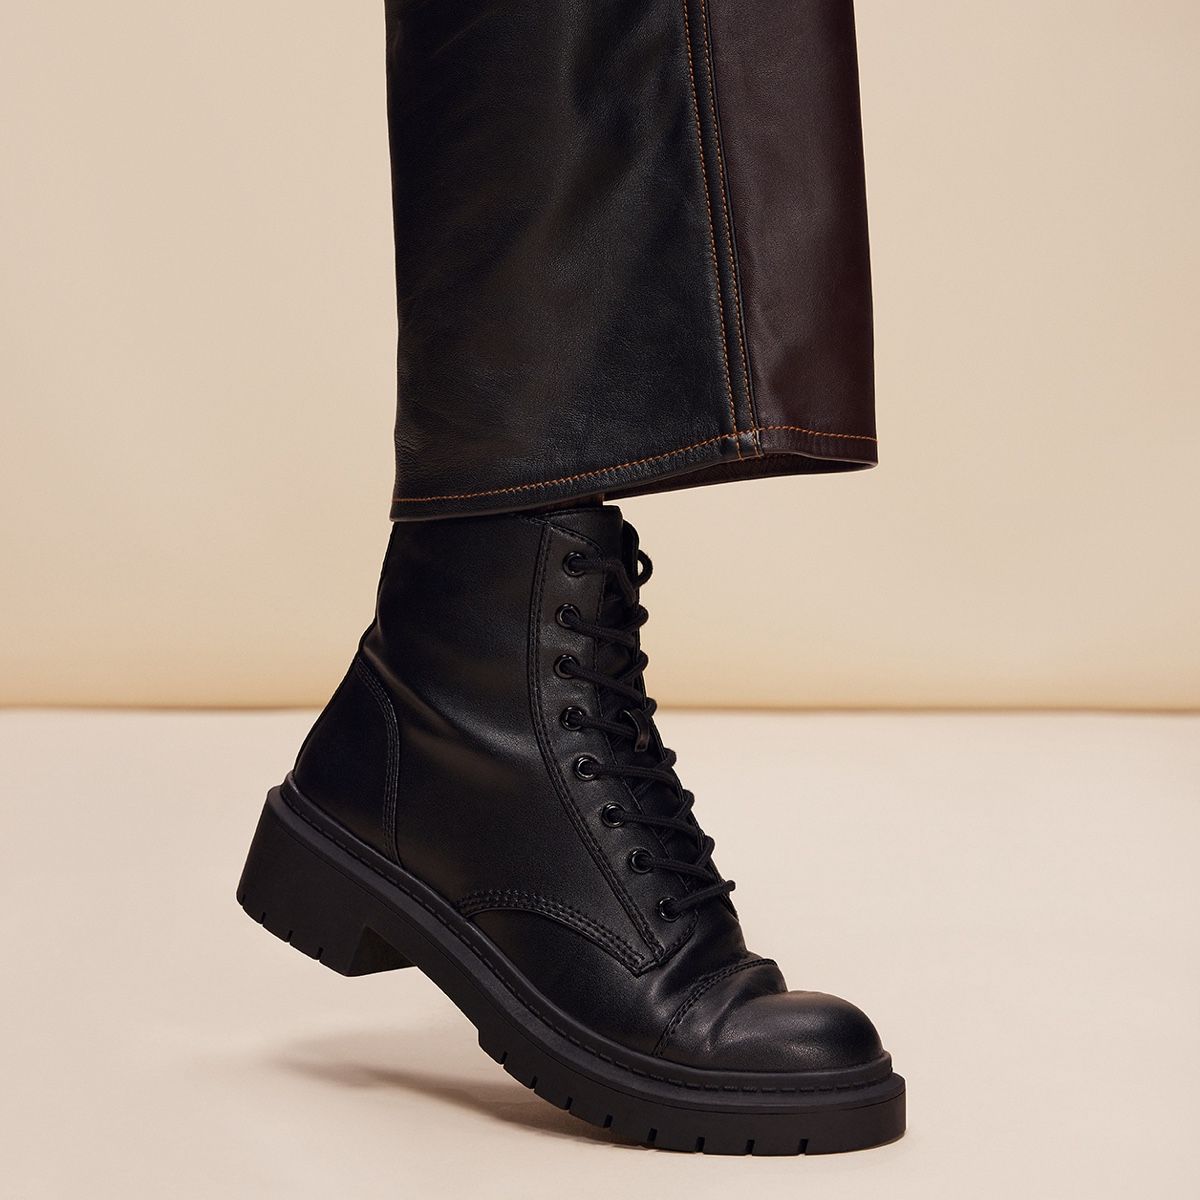 Goer Black Women's Casual boots | ALDO Canada